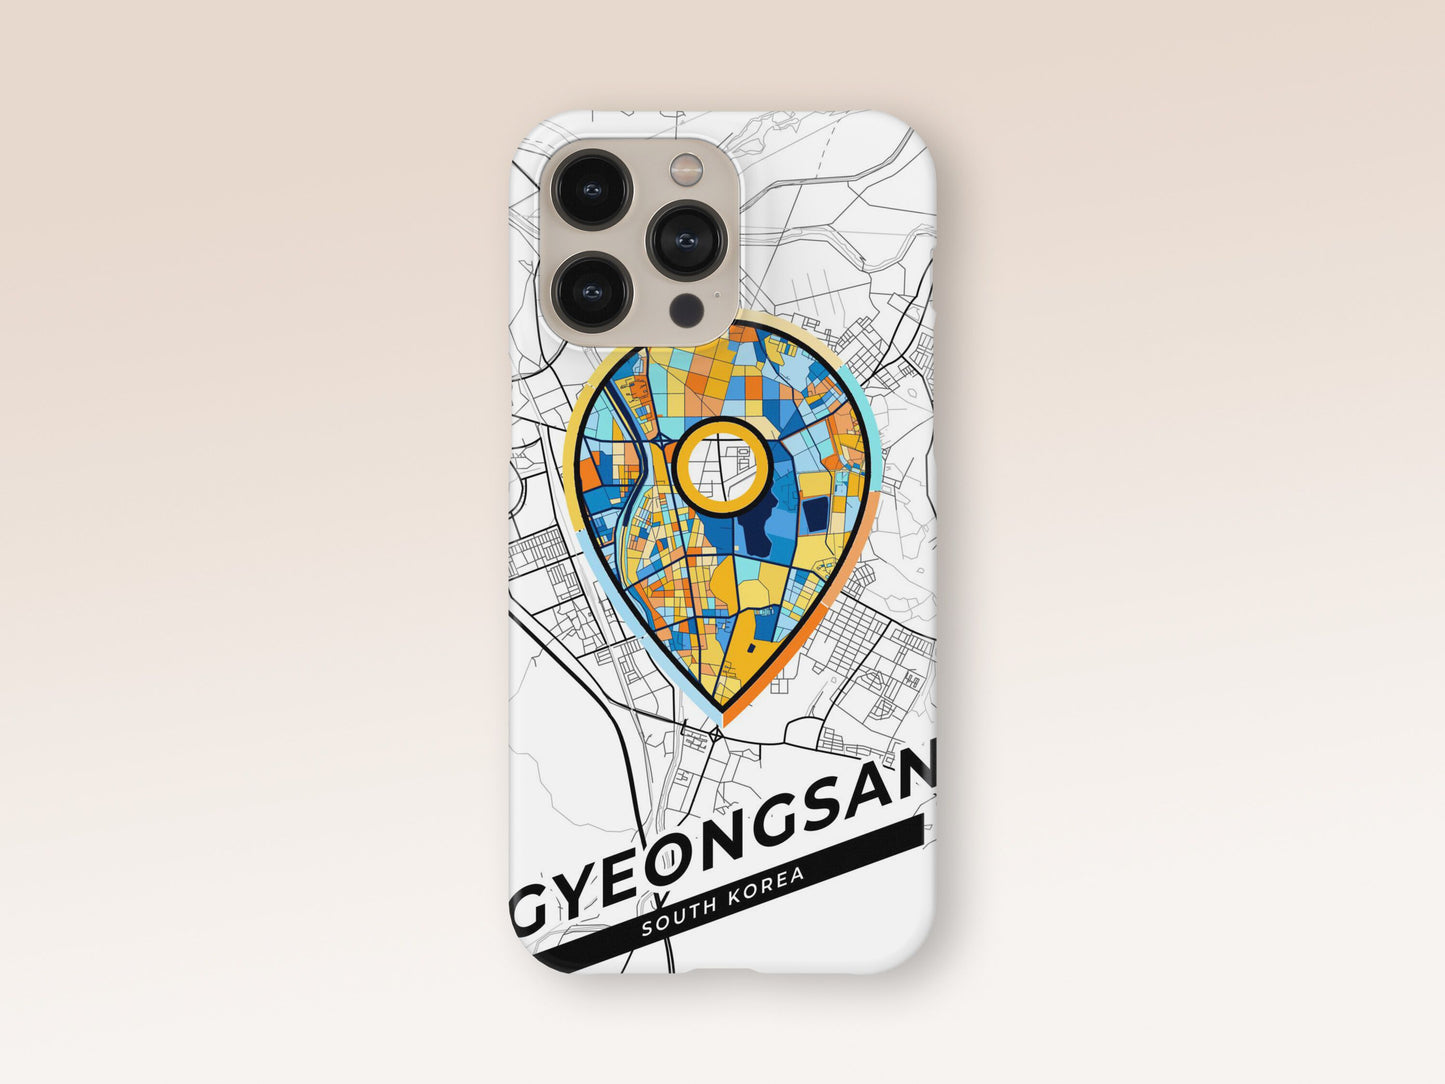 Gyeongsan South Korea slim phone case with colorful icon. Birthday, wedding or housewarming gift. Couple match cases. 1